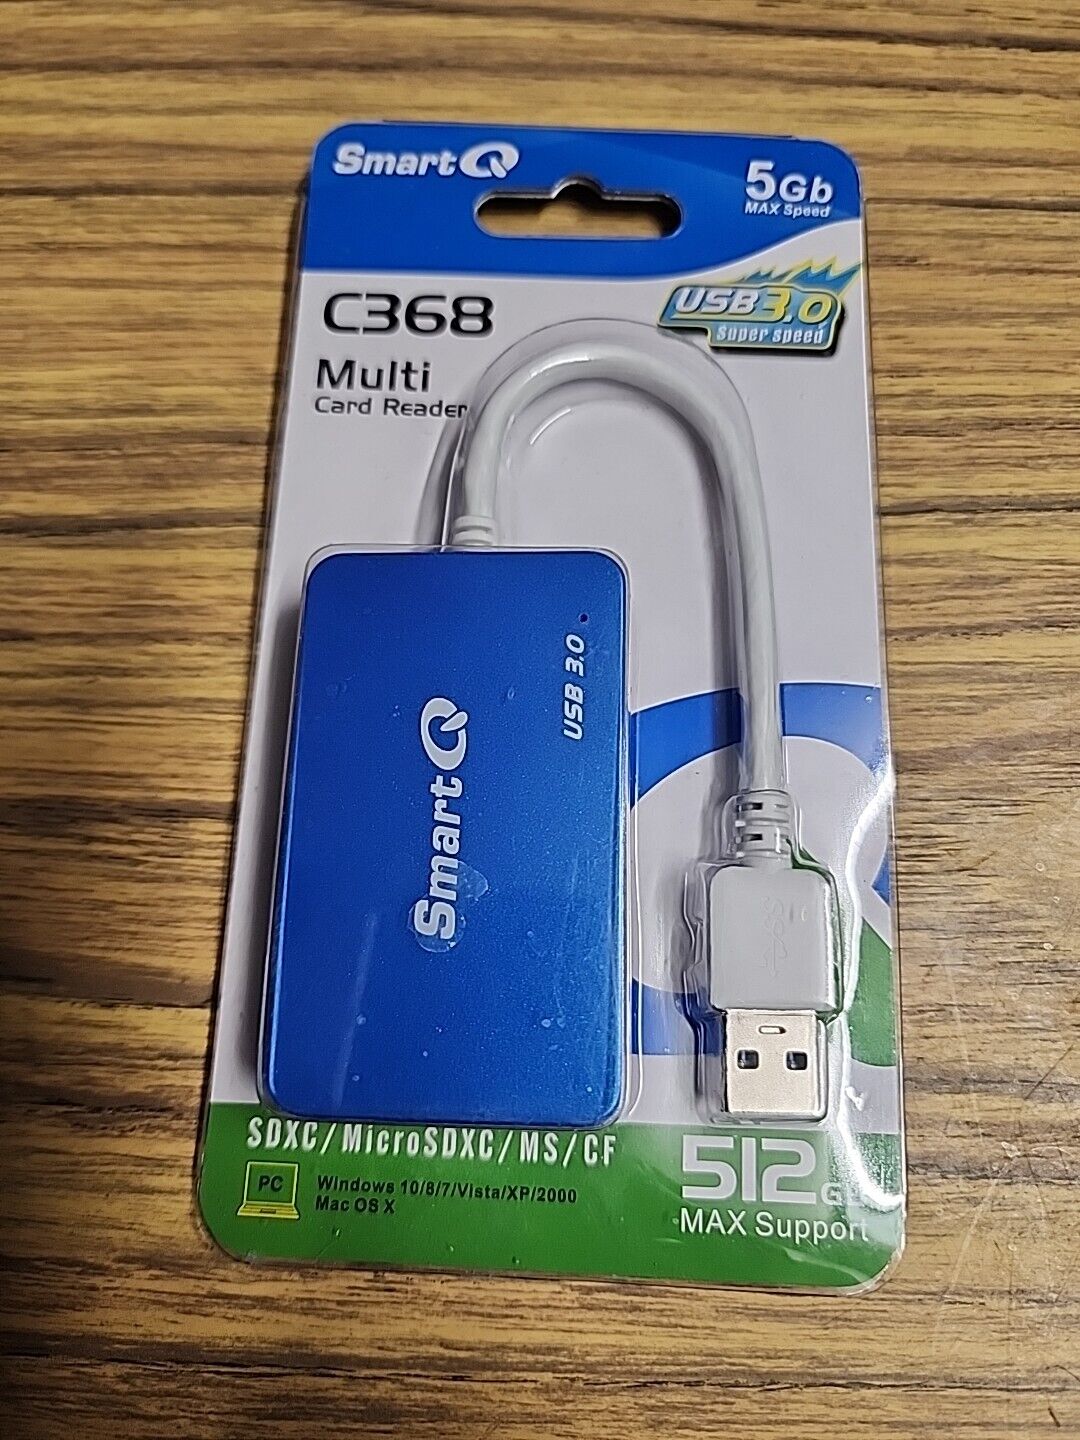 SmartQ C368BK USB 3.0 MULTI-CARD READER, Plug N Play, Apple/Windows Compatible